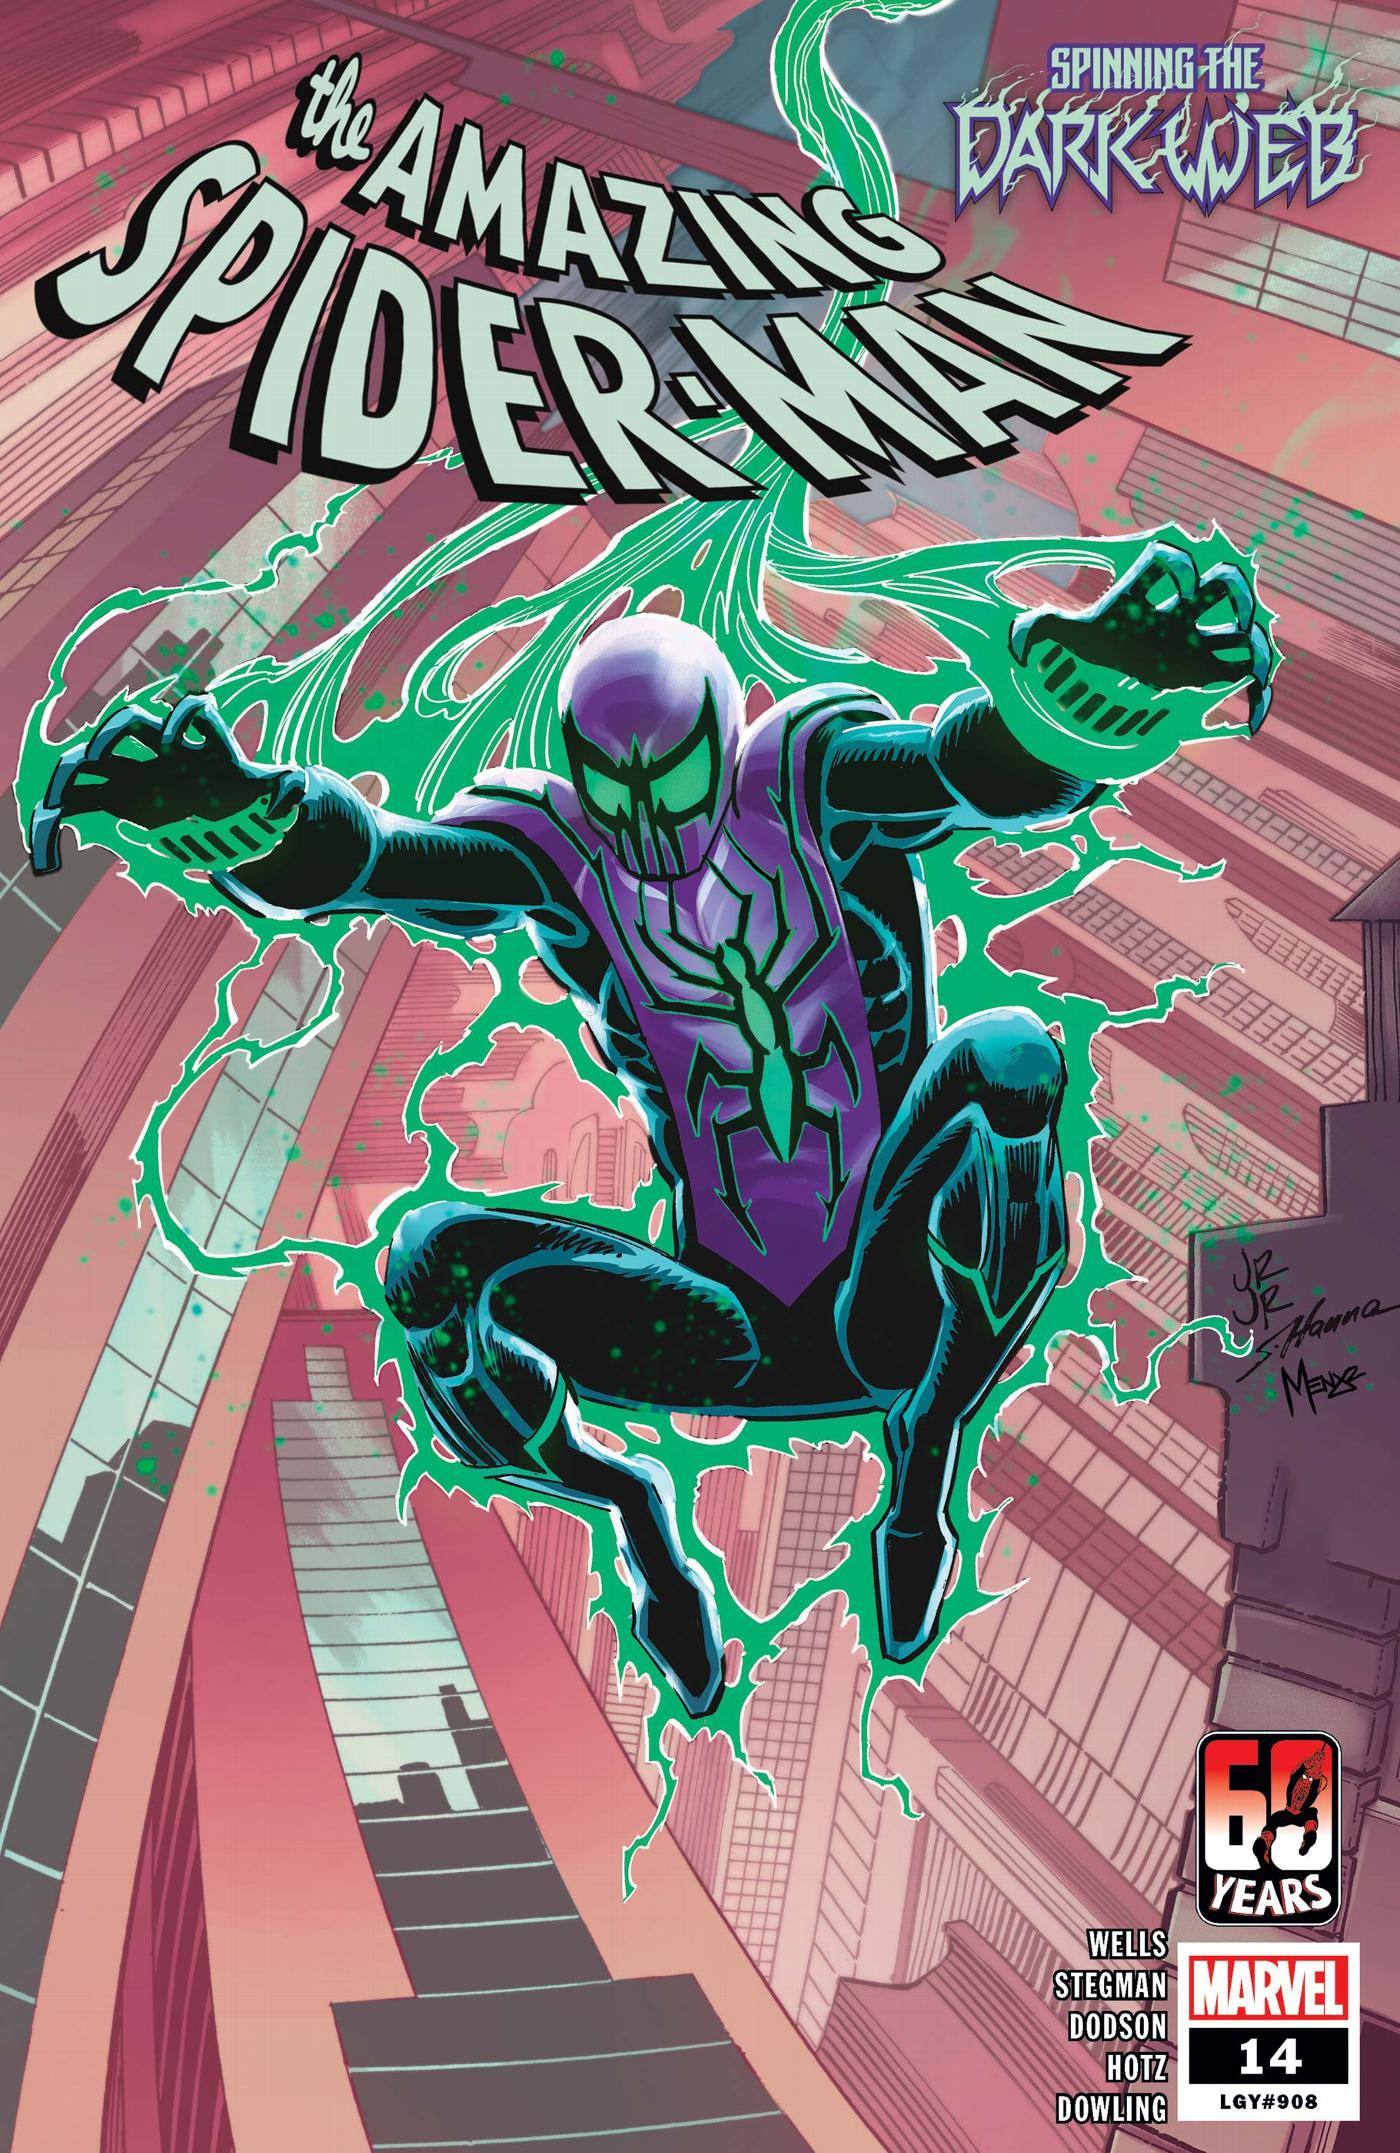 The Amazing Spider-Man #14 Spinning The Dark Web (2022)